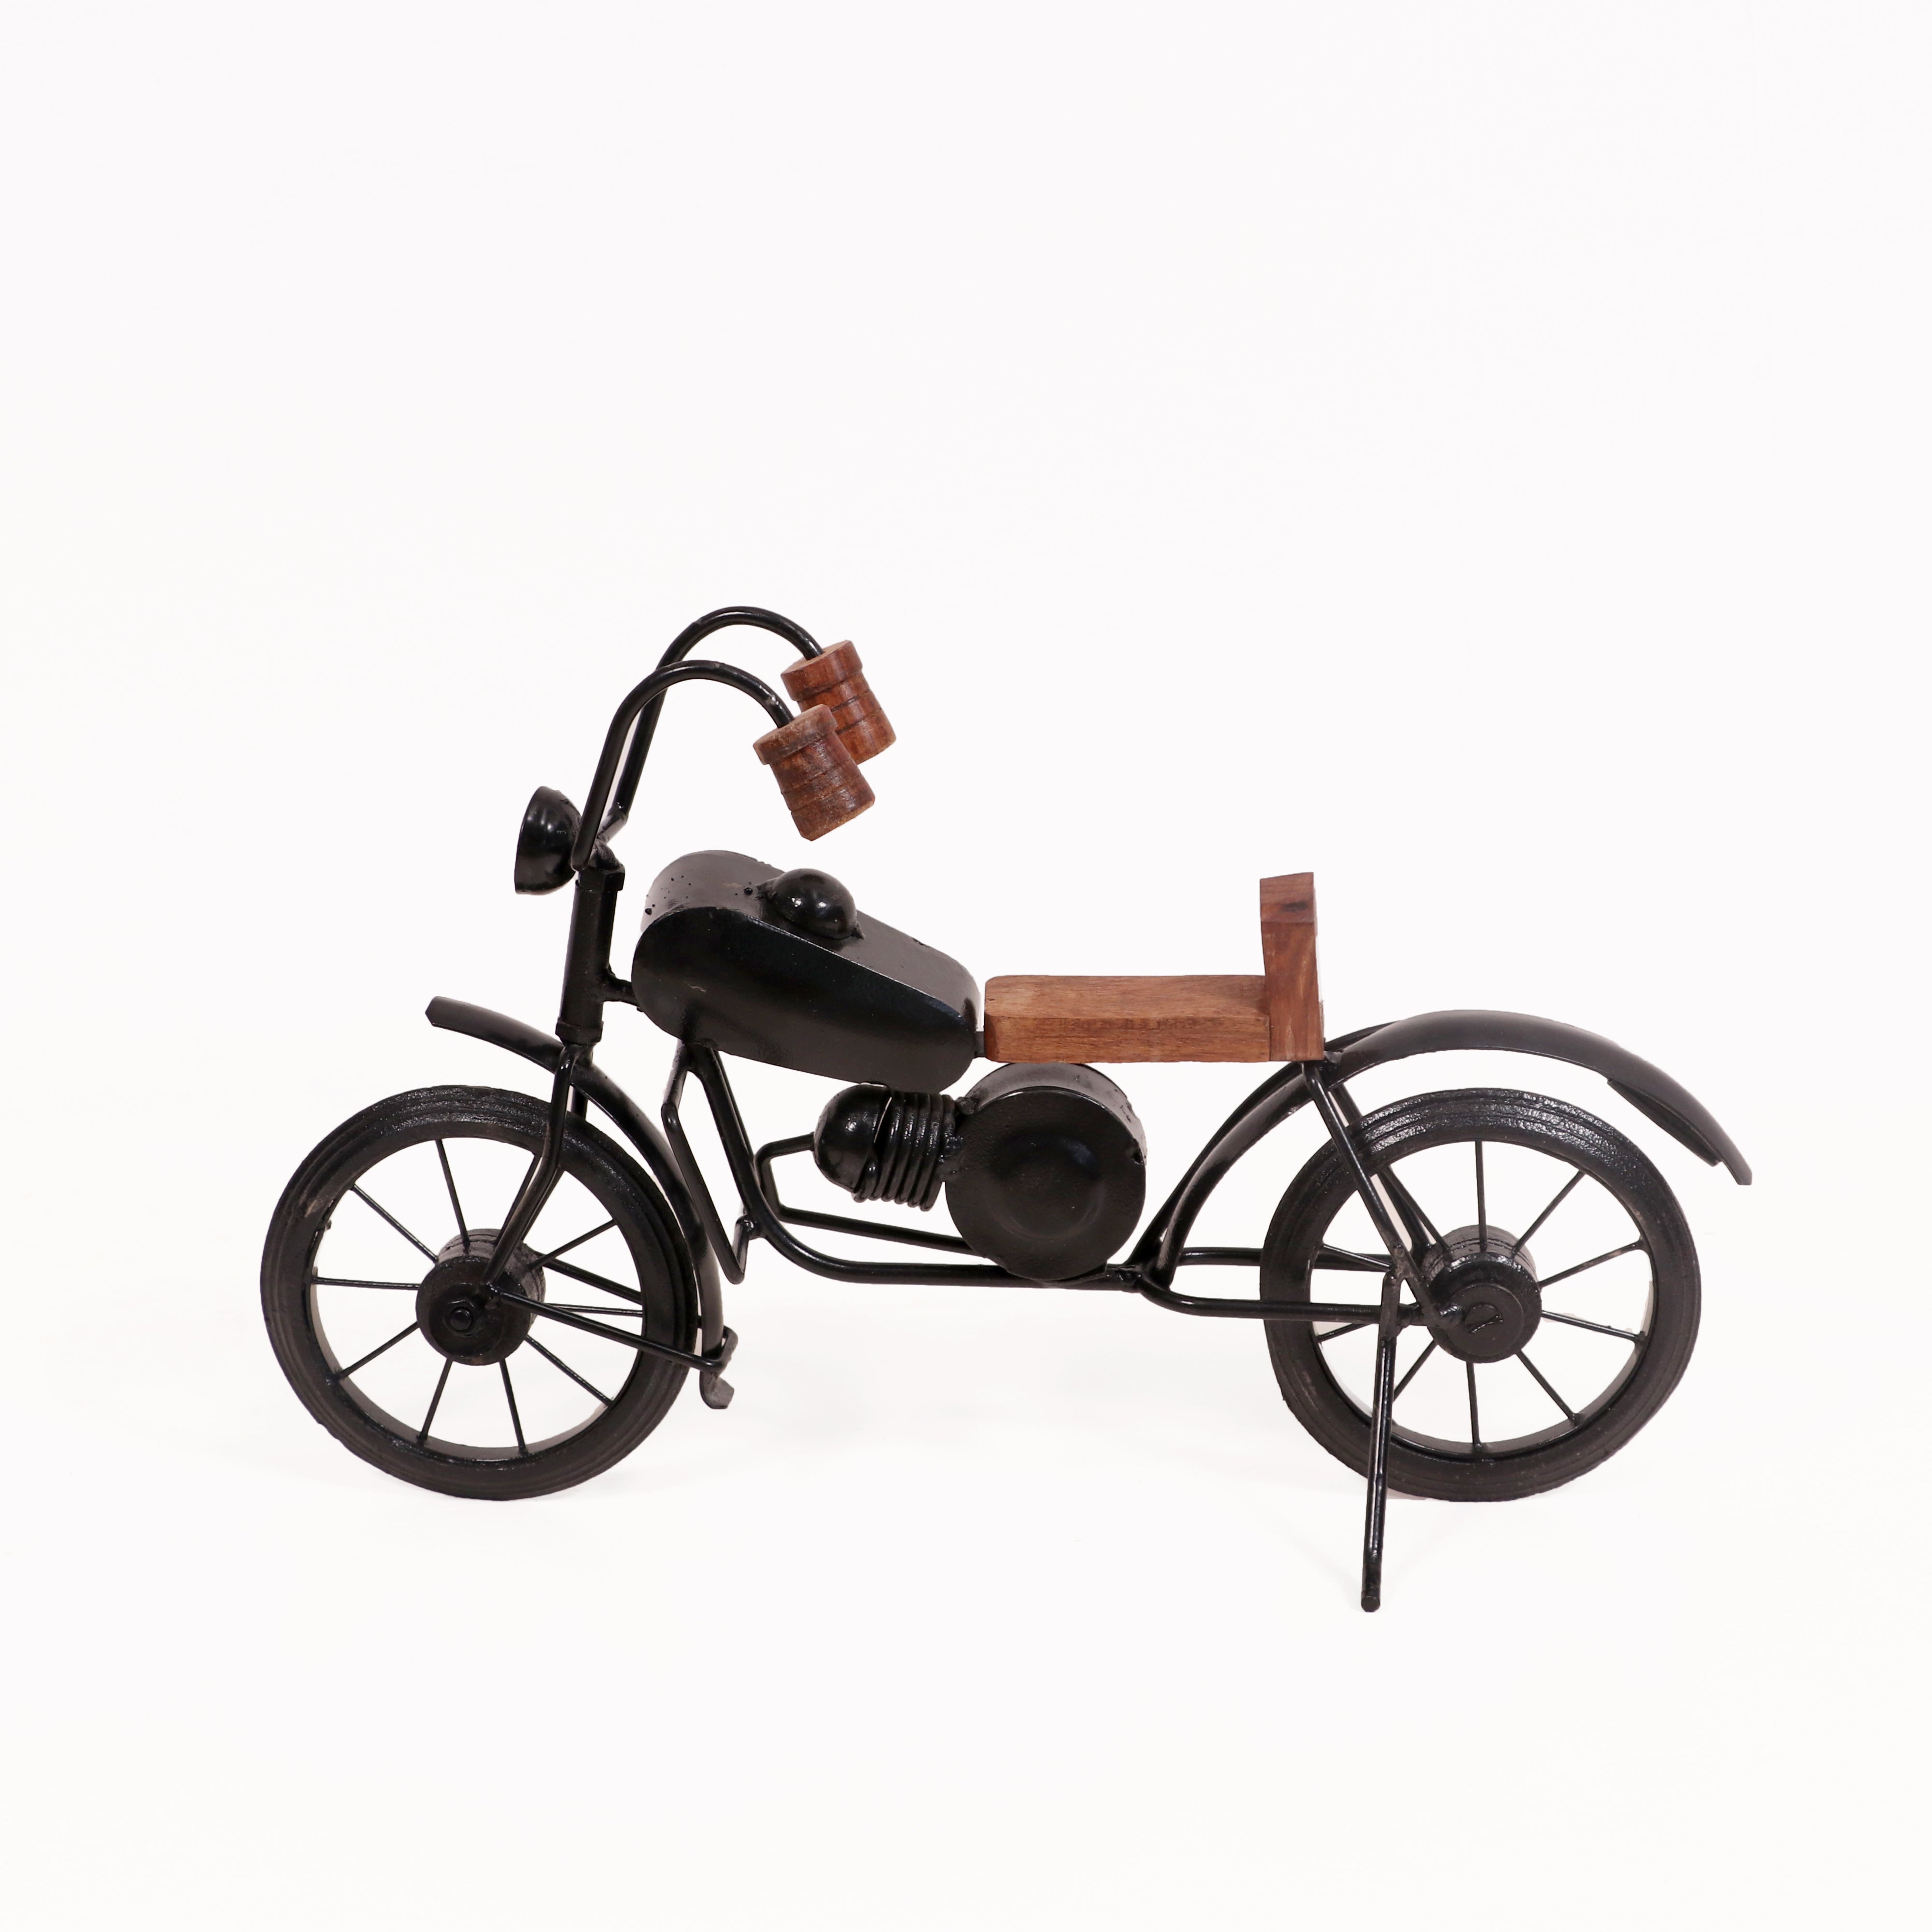 Metallic Miniature superbike inspired vehicle Vehicle figurine